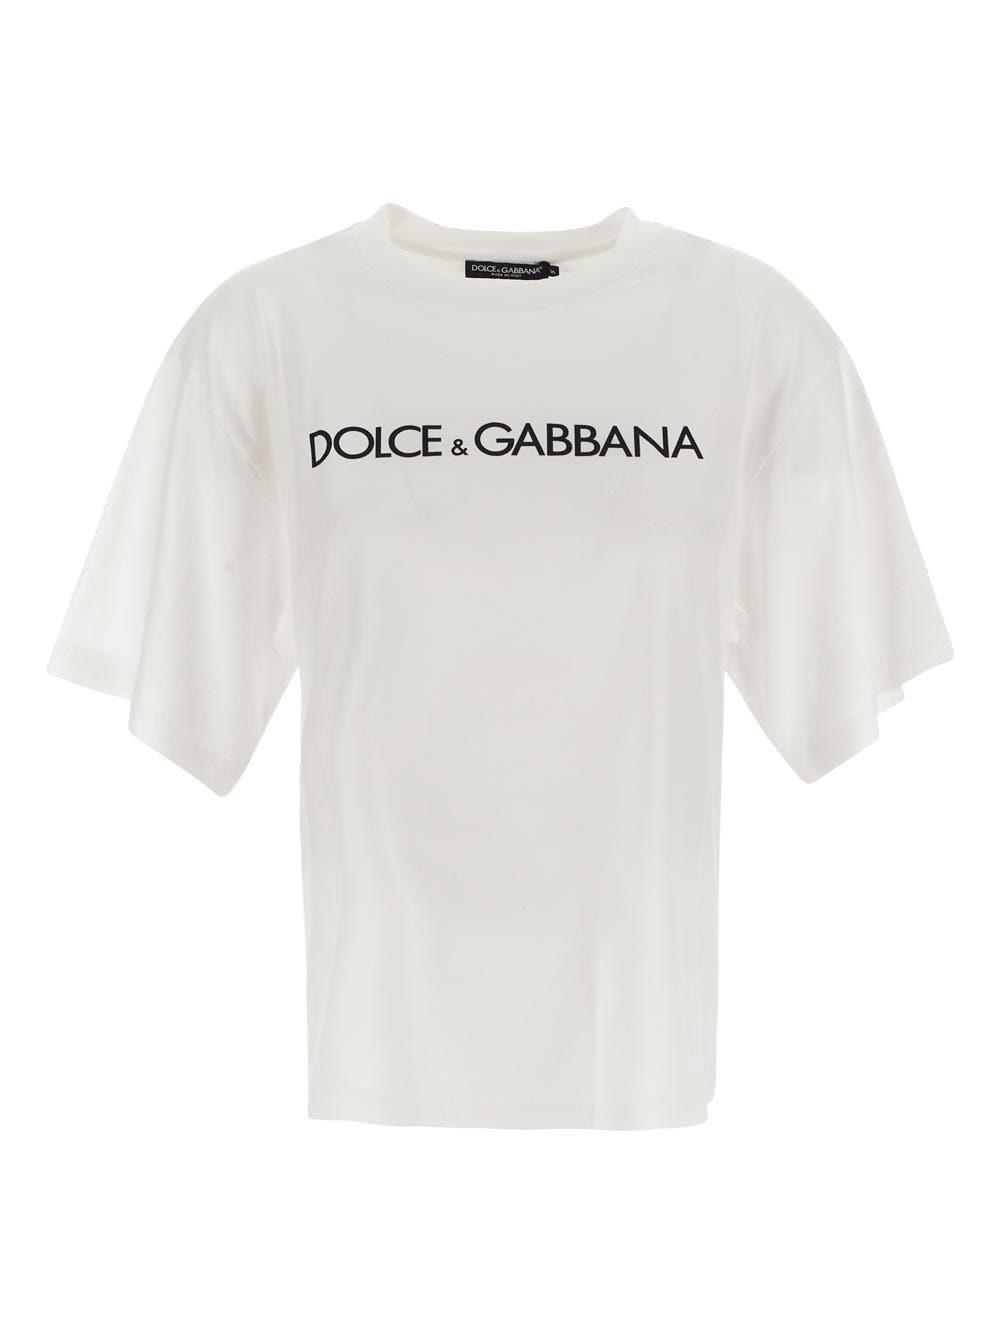 Dolce & Gabbana Logo T-shirt in White | Lyst